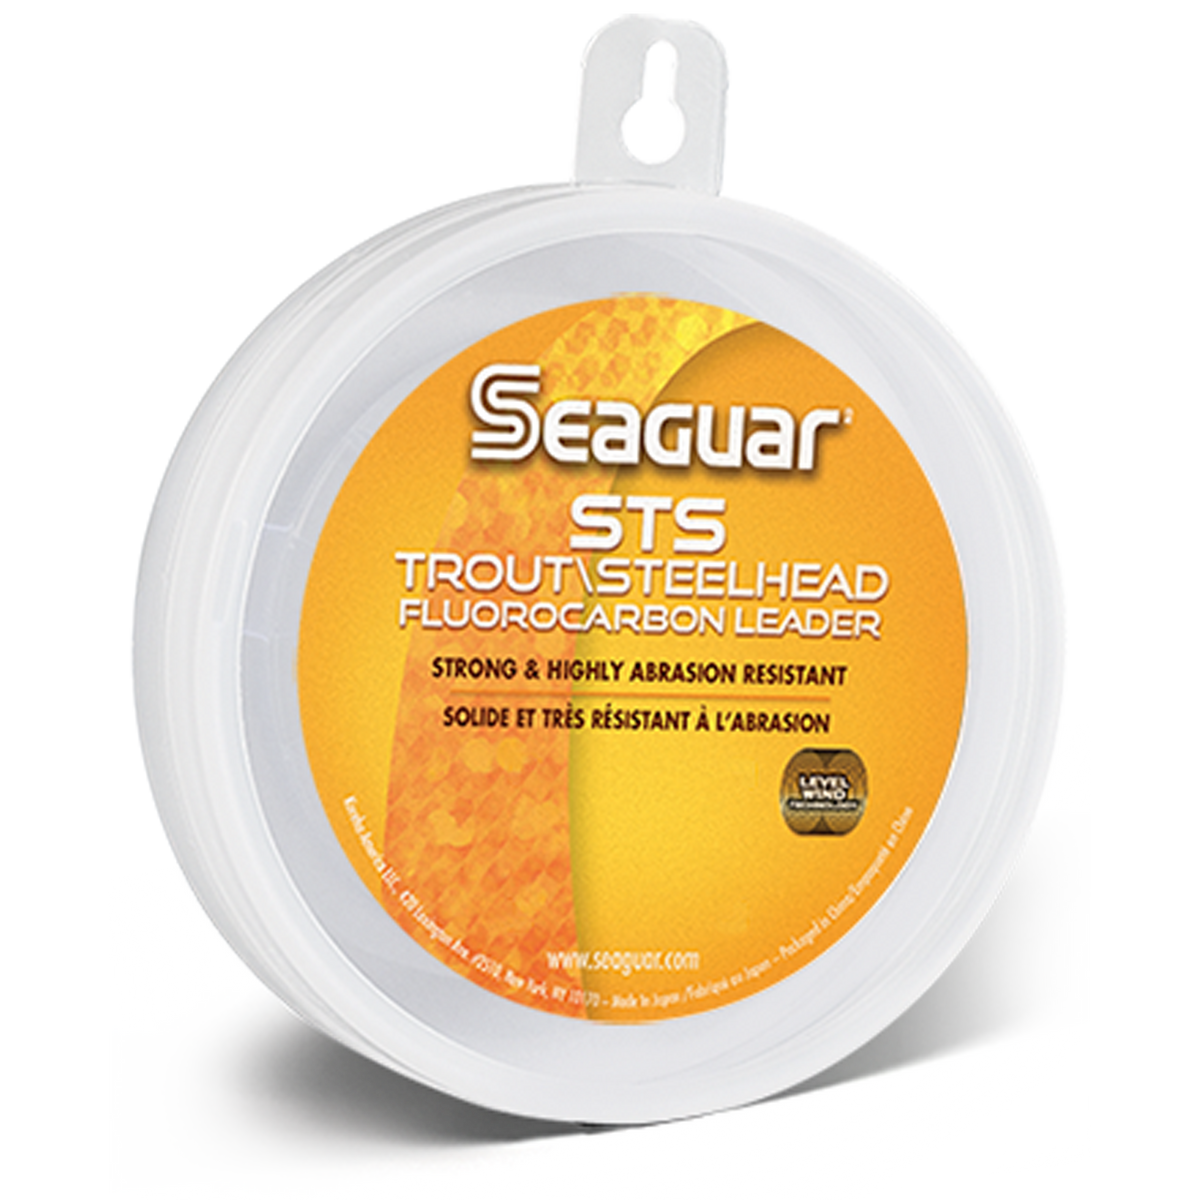 Seaguar Gold Label 100% Fluorocarbon Leader Fishing Line (DSF